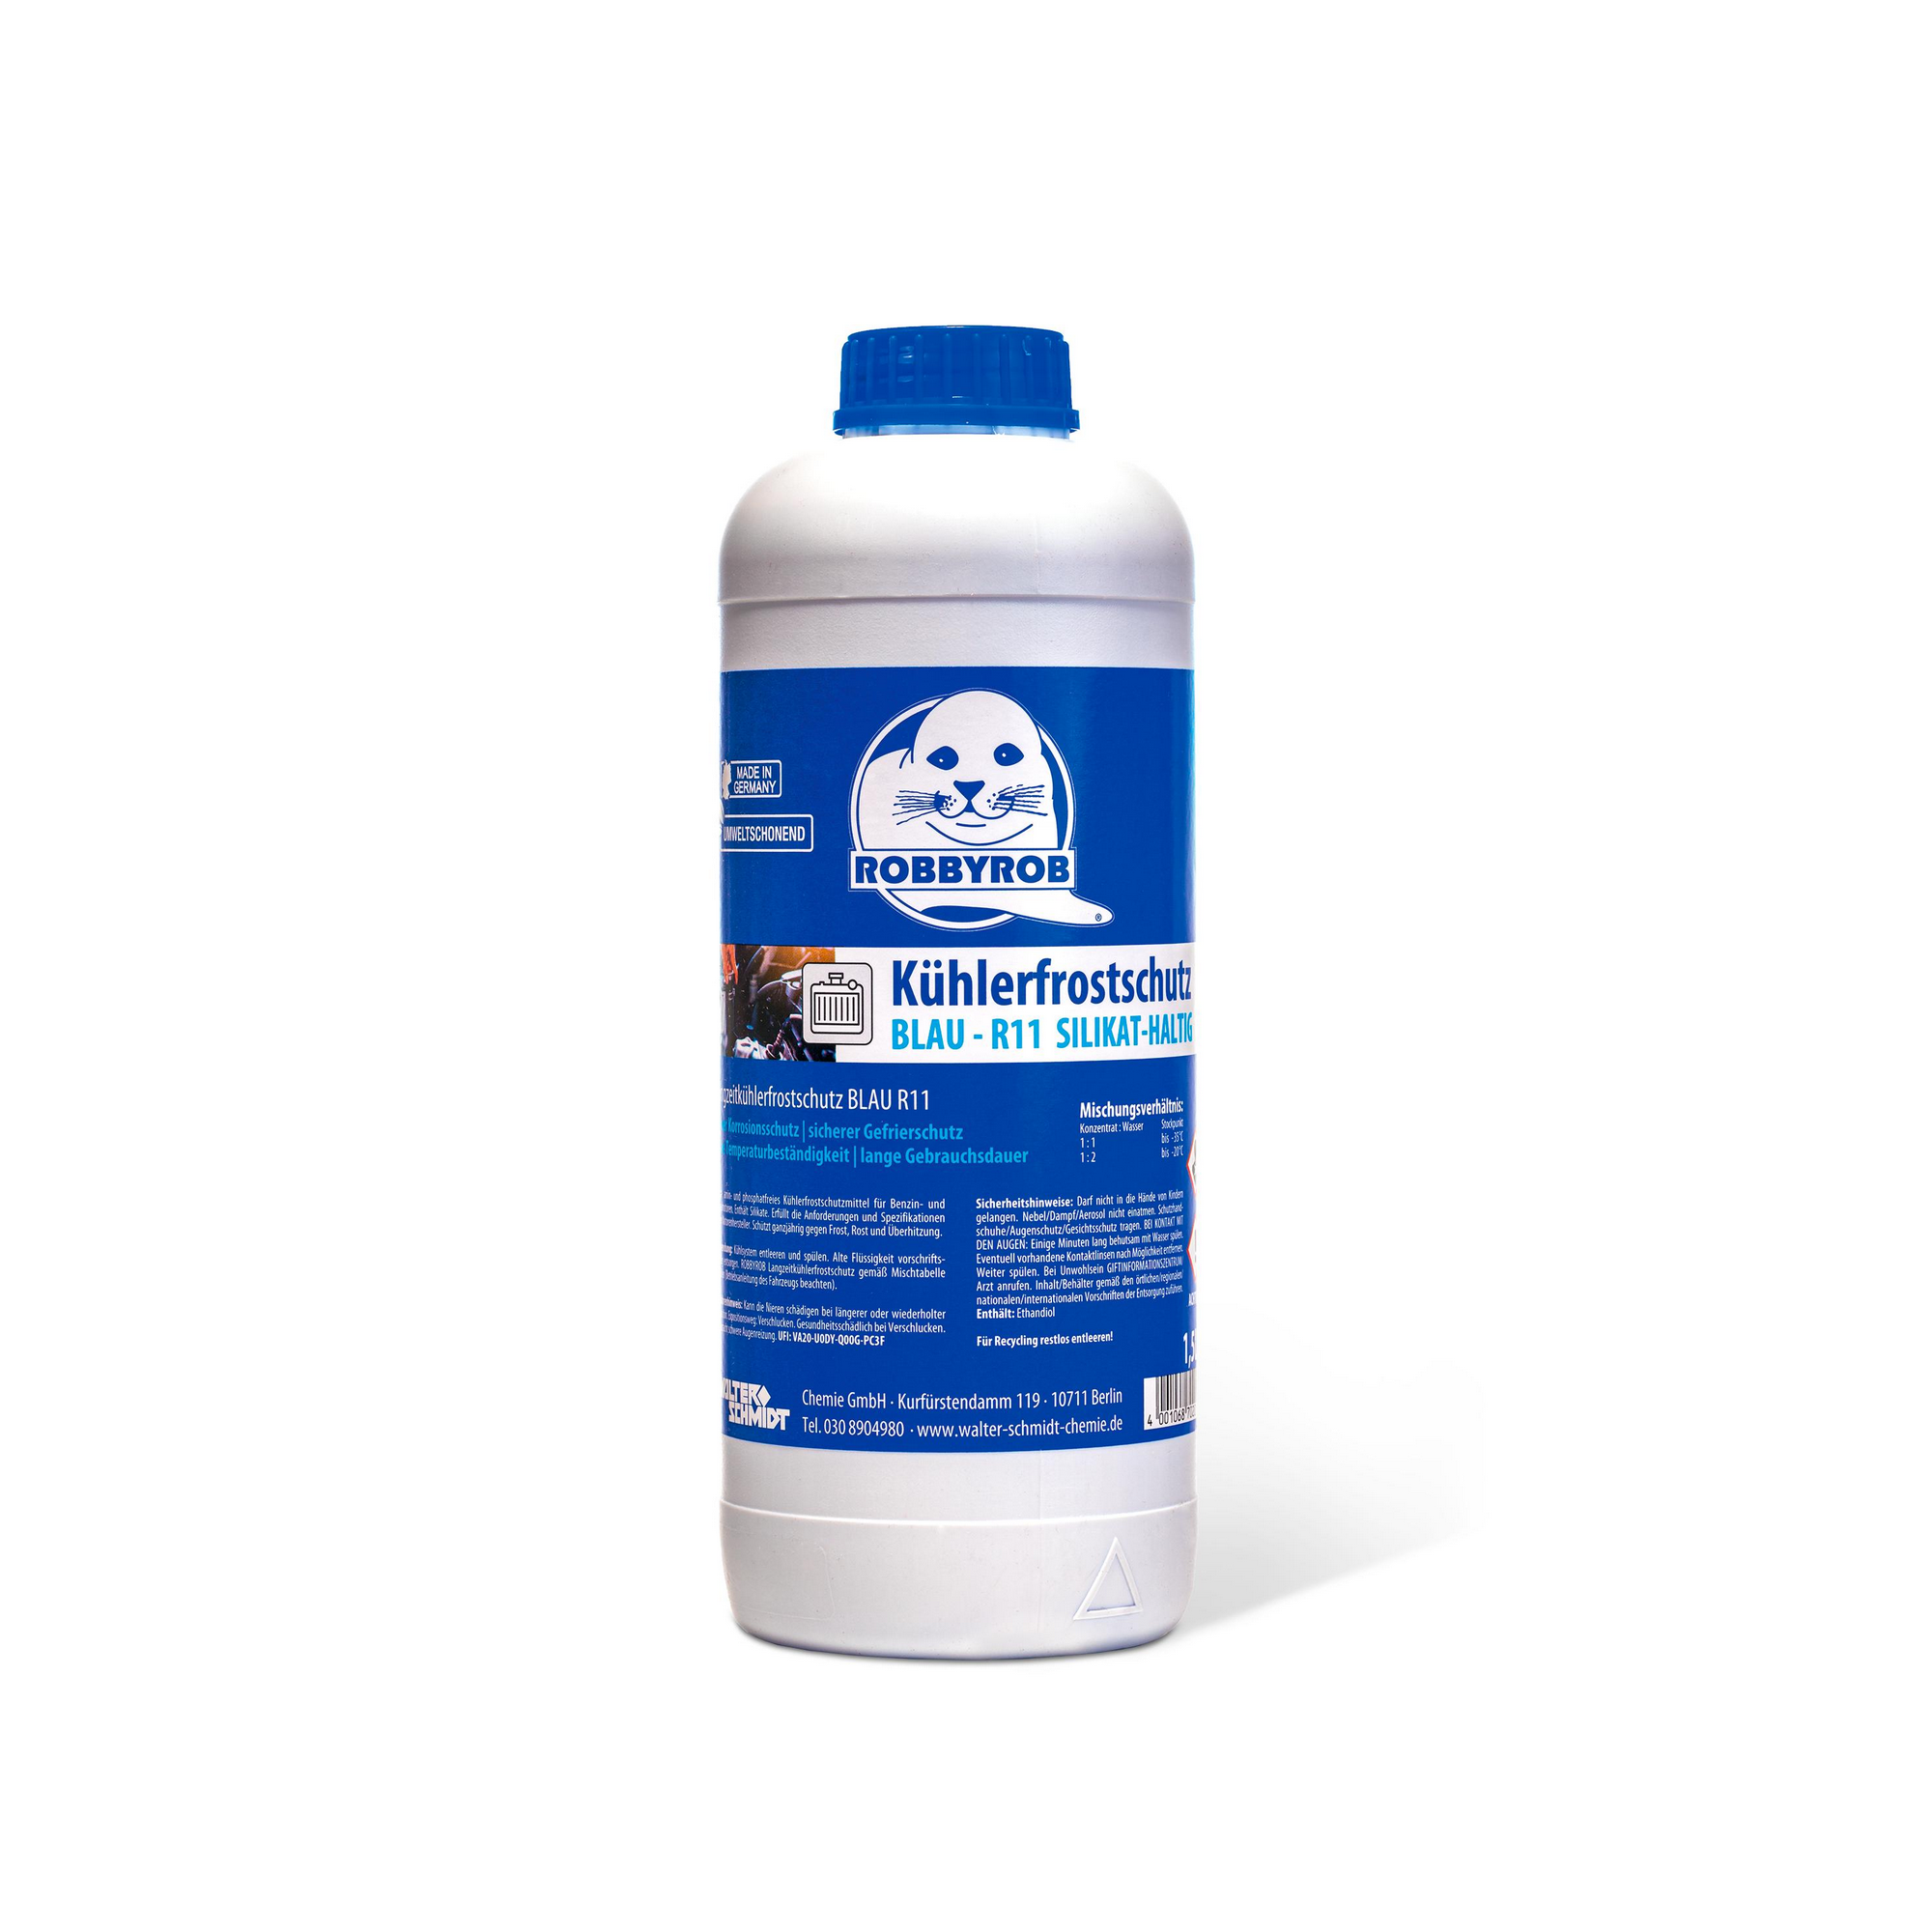 Kühlerfrostschutz 'Robbyrob' blau 1,5 l + product picture